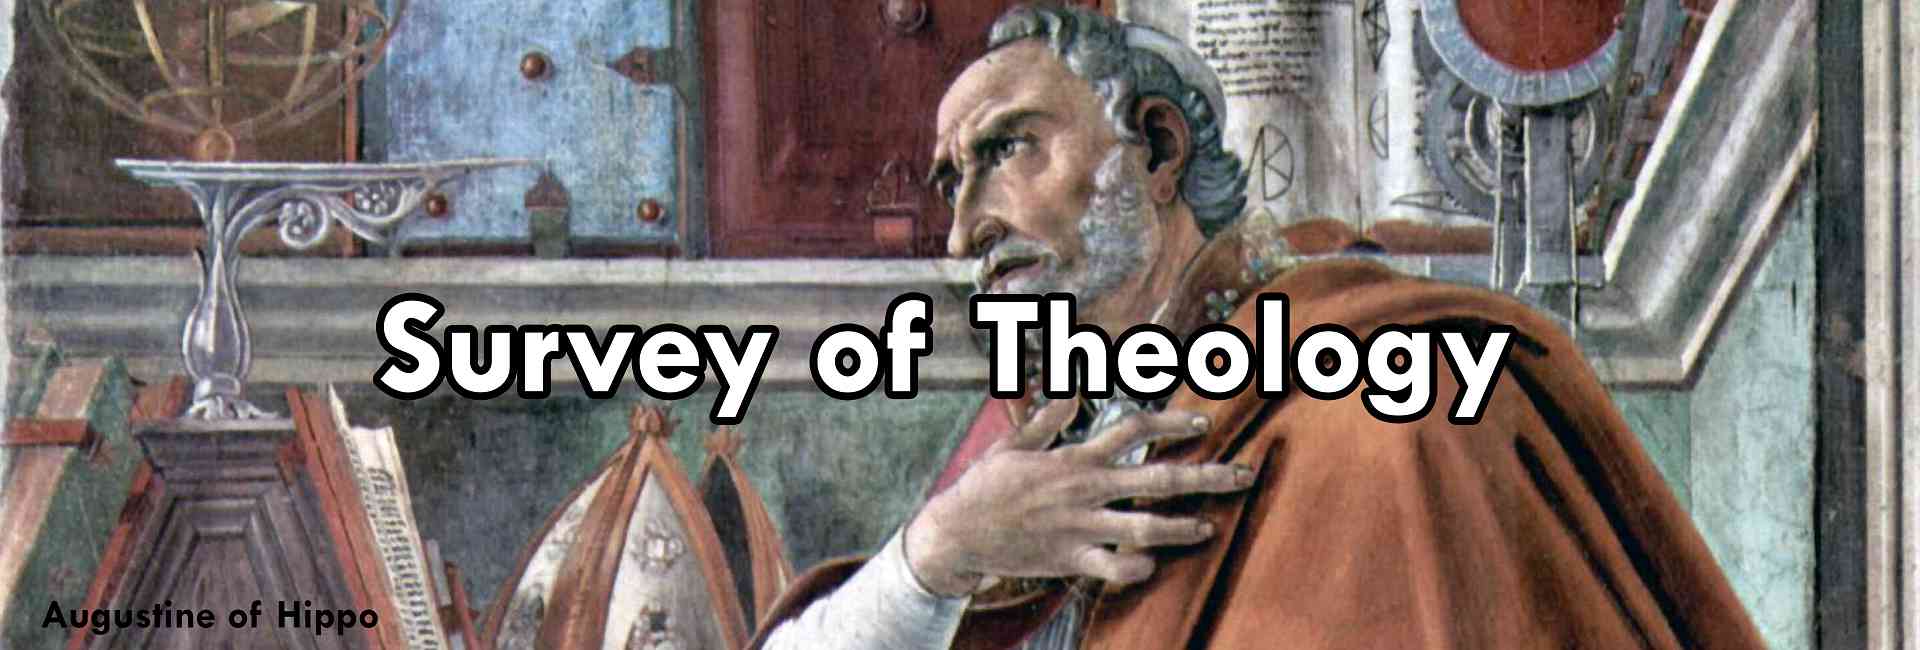 Survey of Theology